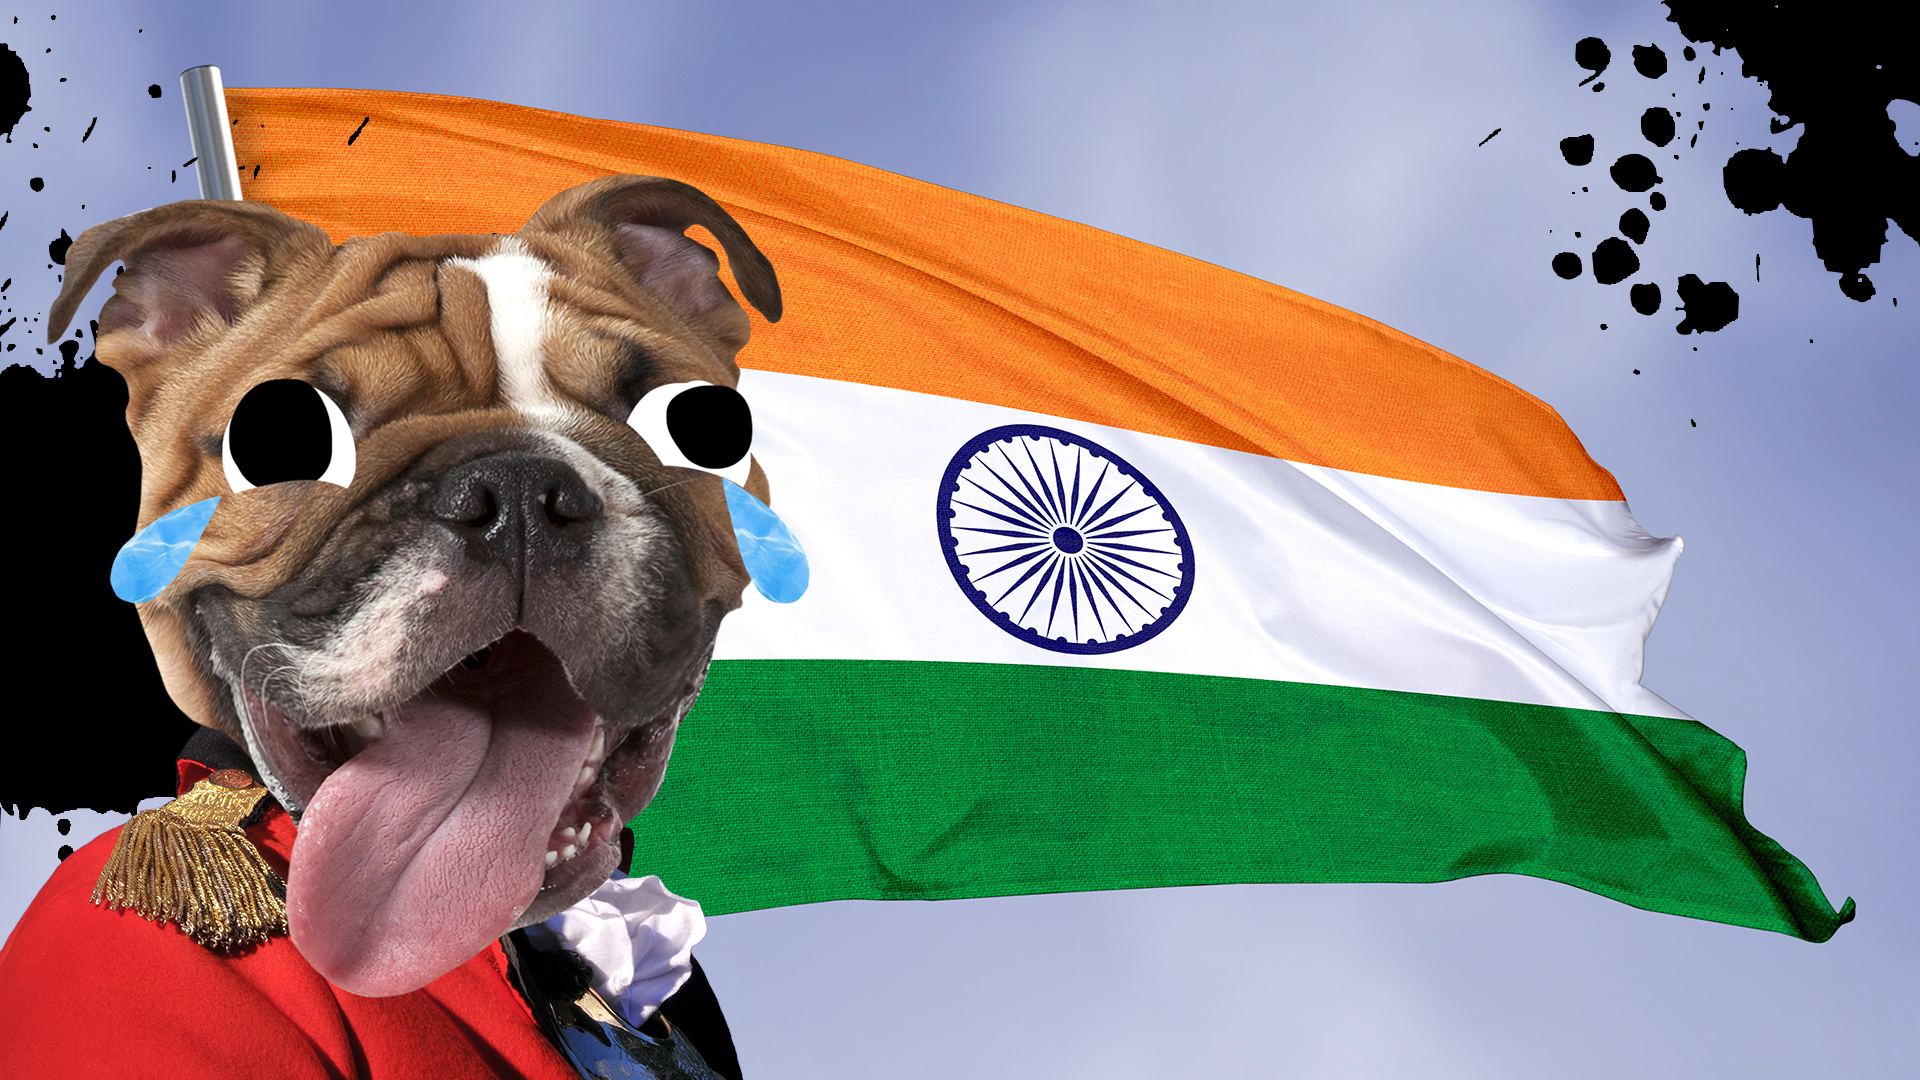 A bulldog slobbers next to an Indian flag